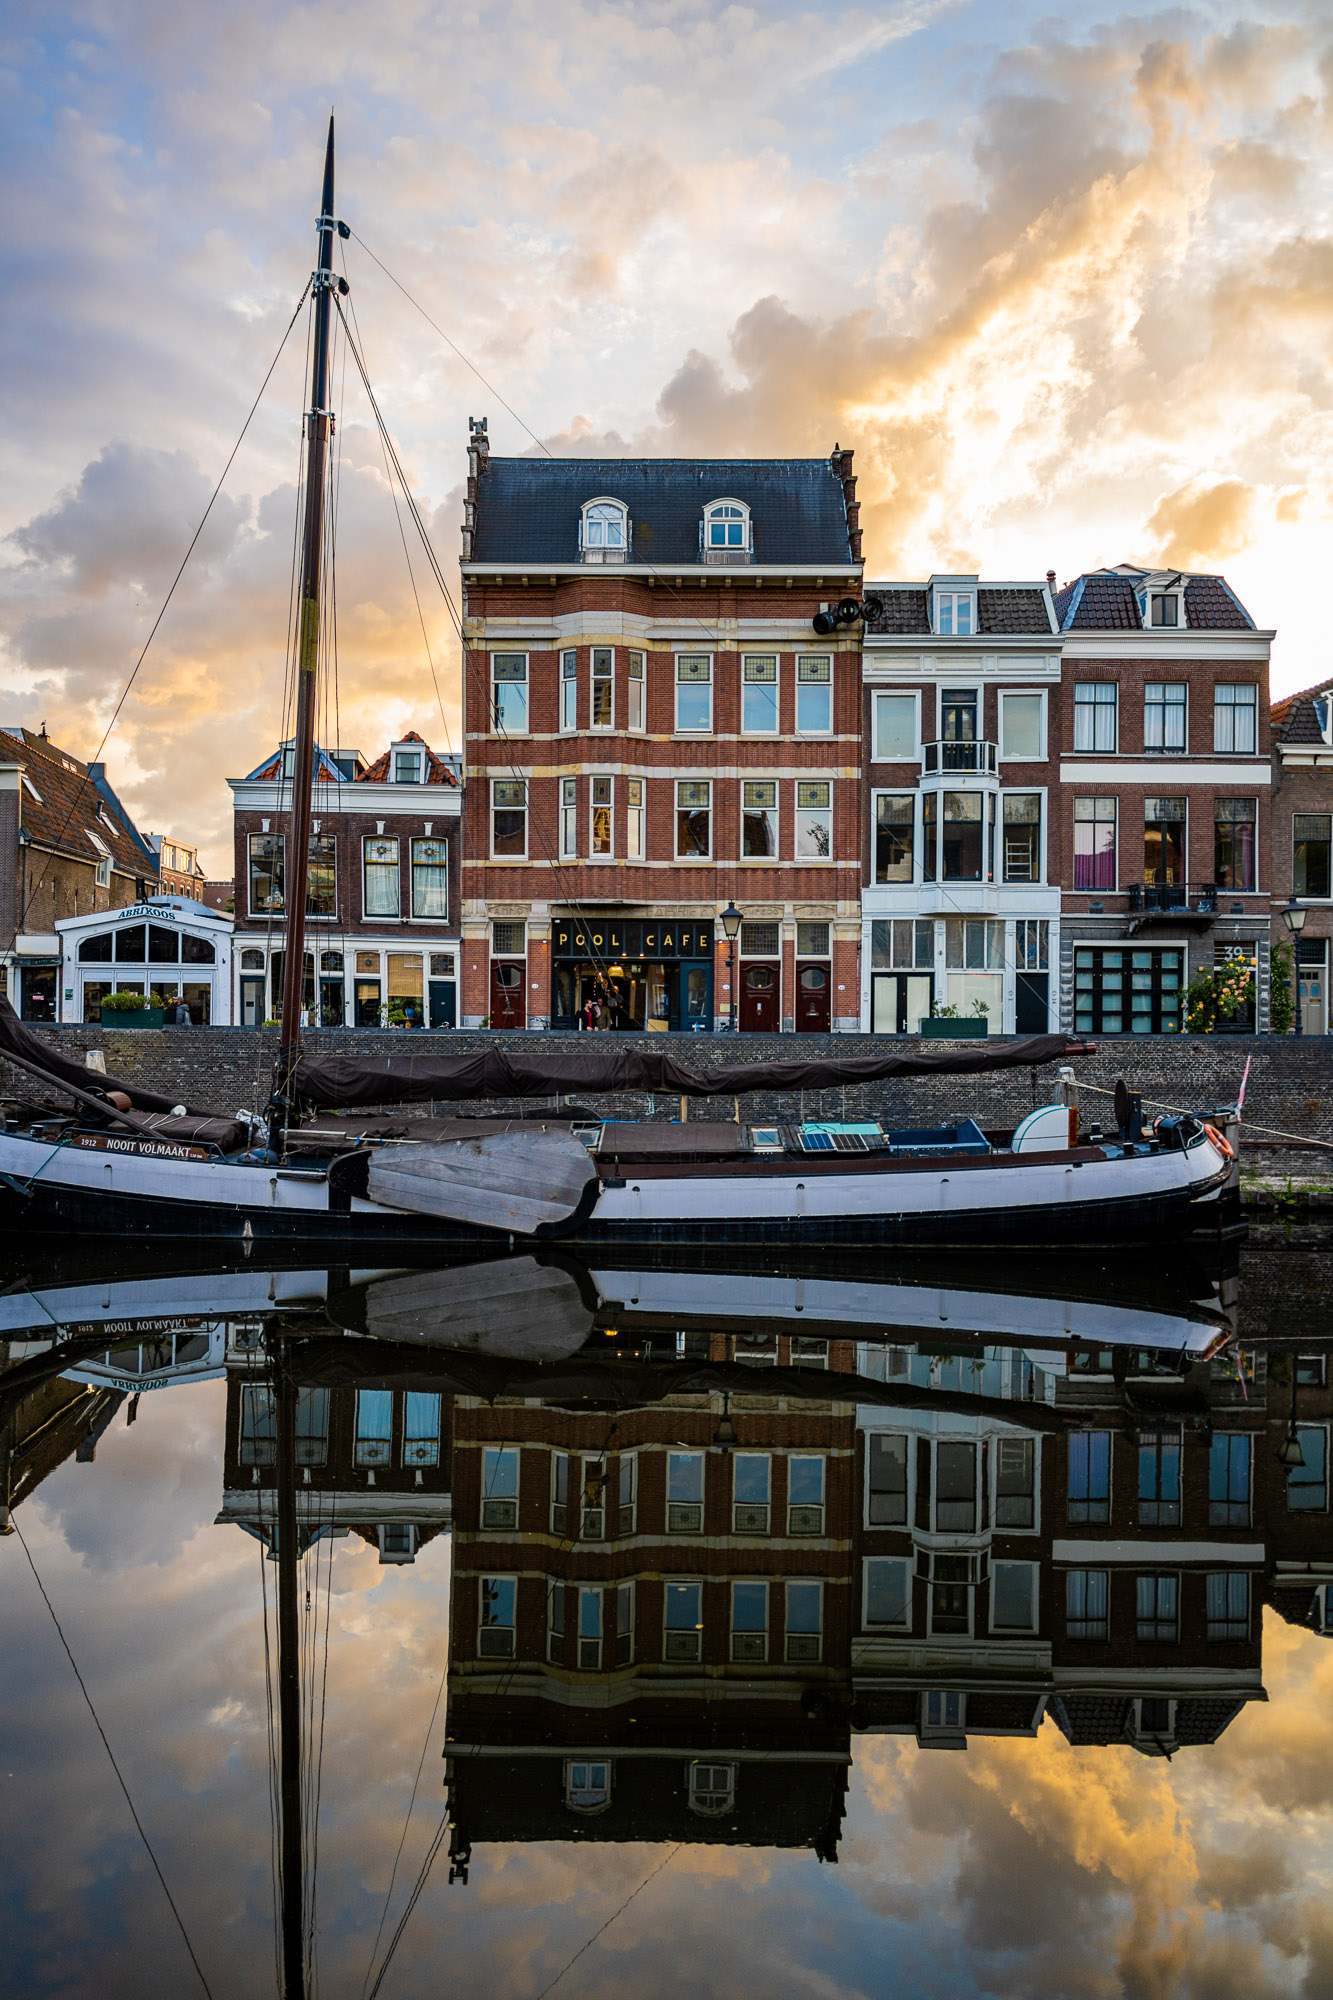 Delfshaven Old City - Netherlands - Europe